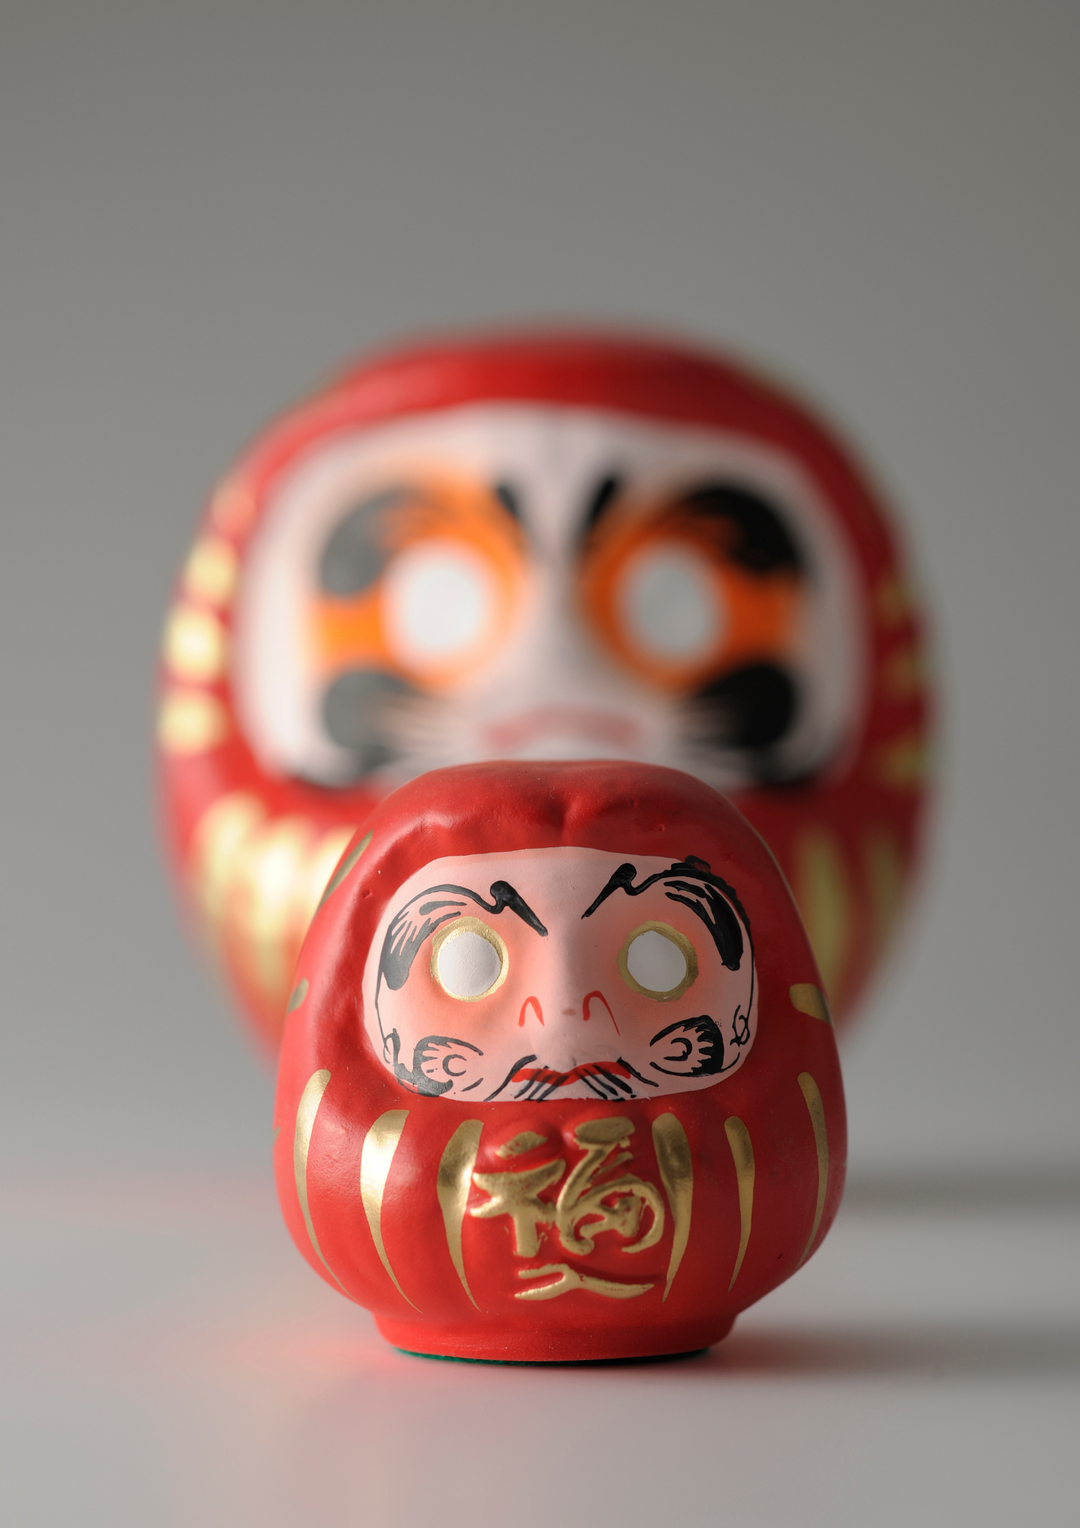 Antique red daruma figurine, representing determination and goal-setting in Japanese culture.